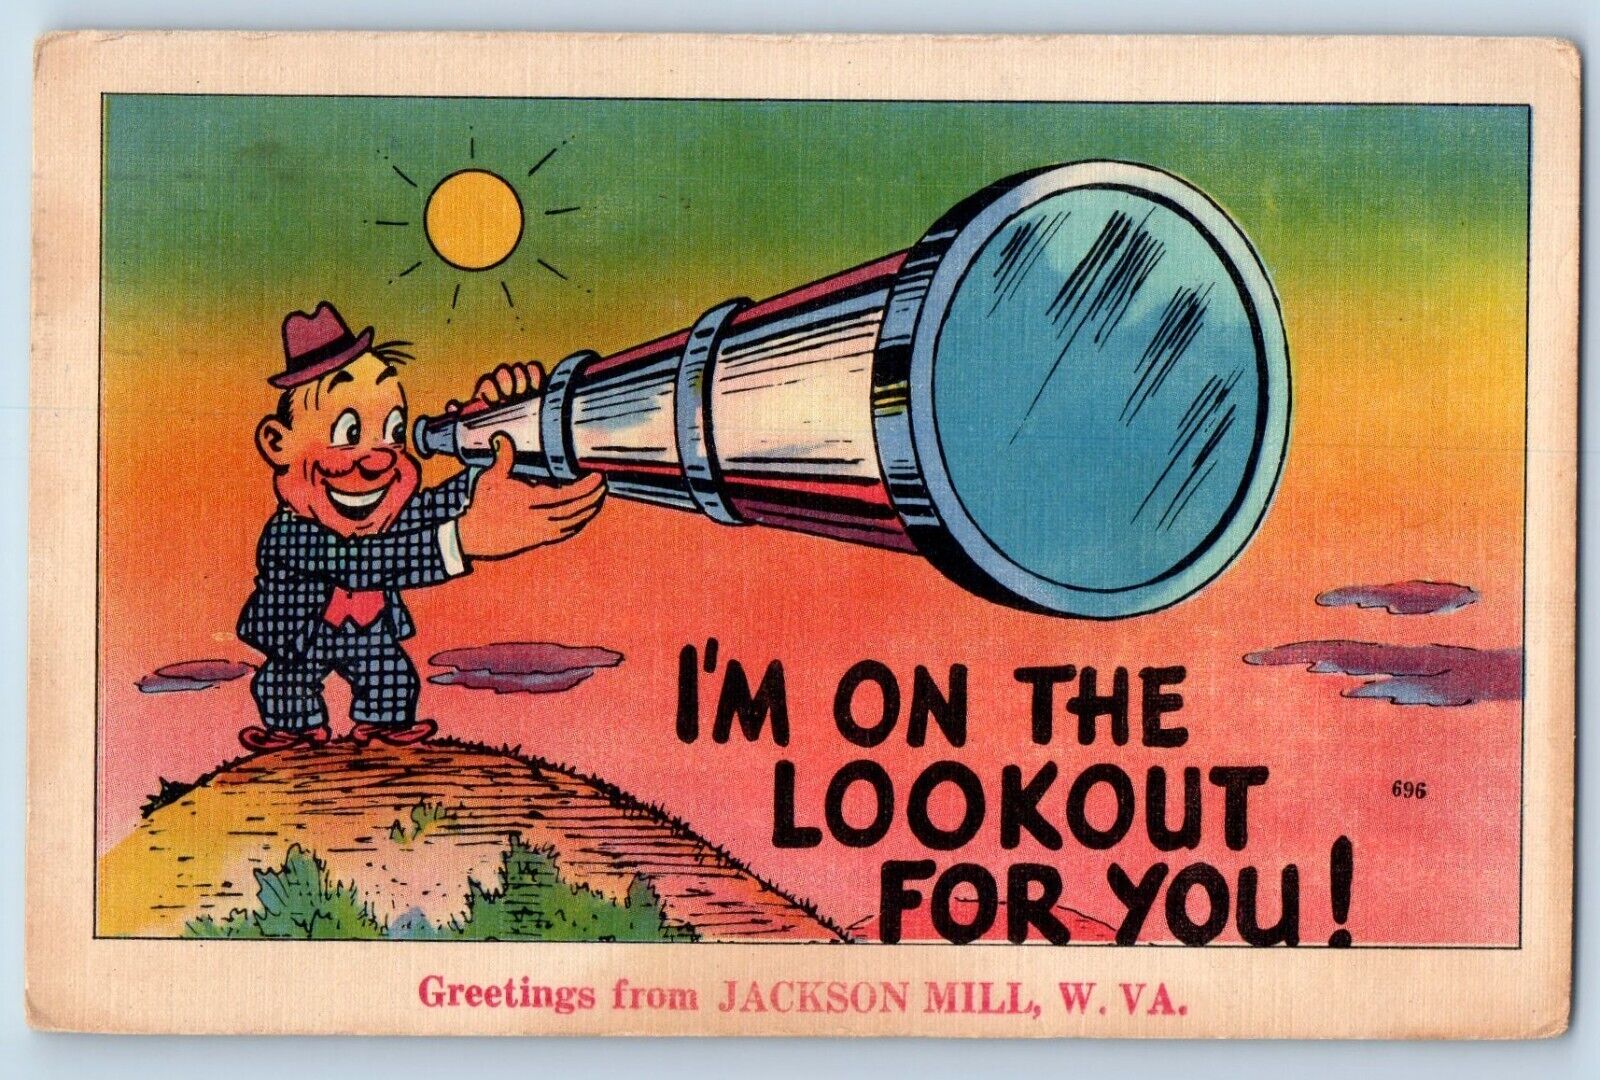 Jackson Mill West Virginia WV Postcard I'm Lookout For You 1947 Vintage Antique